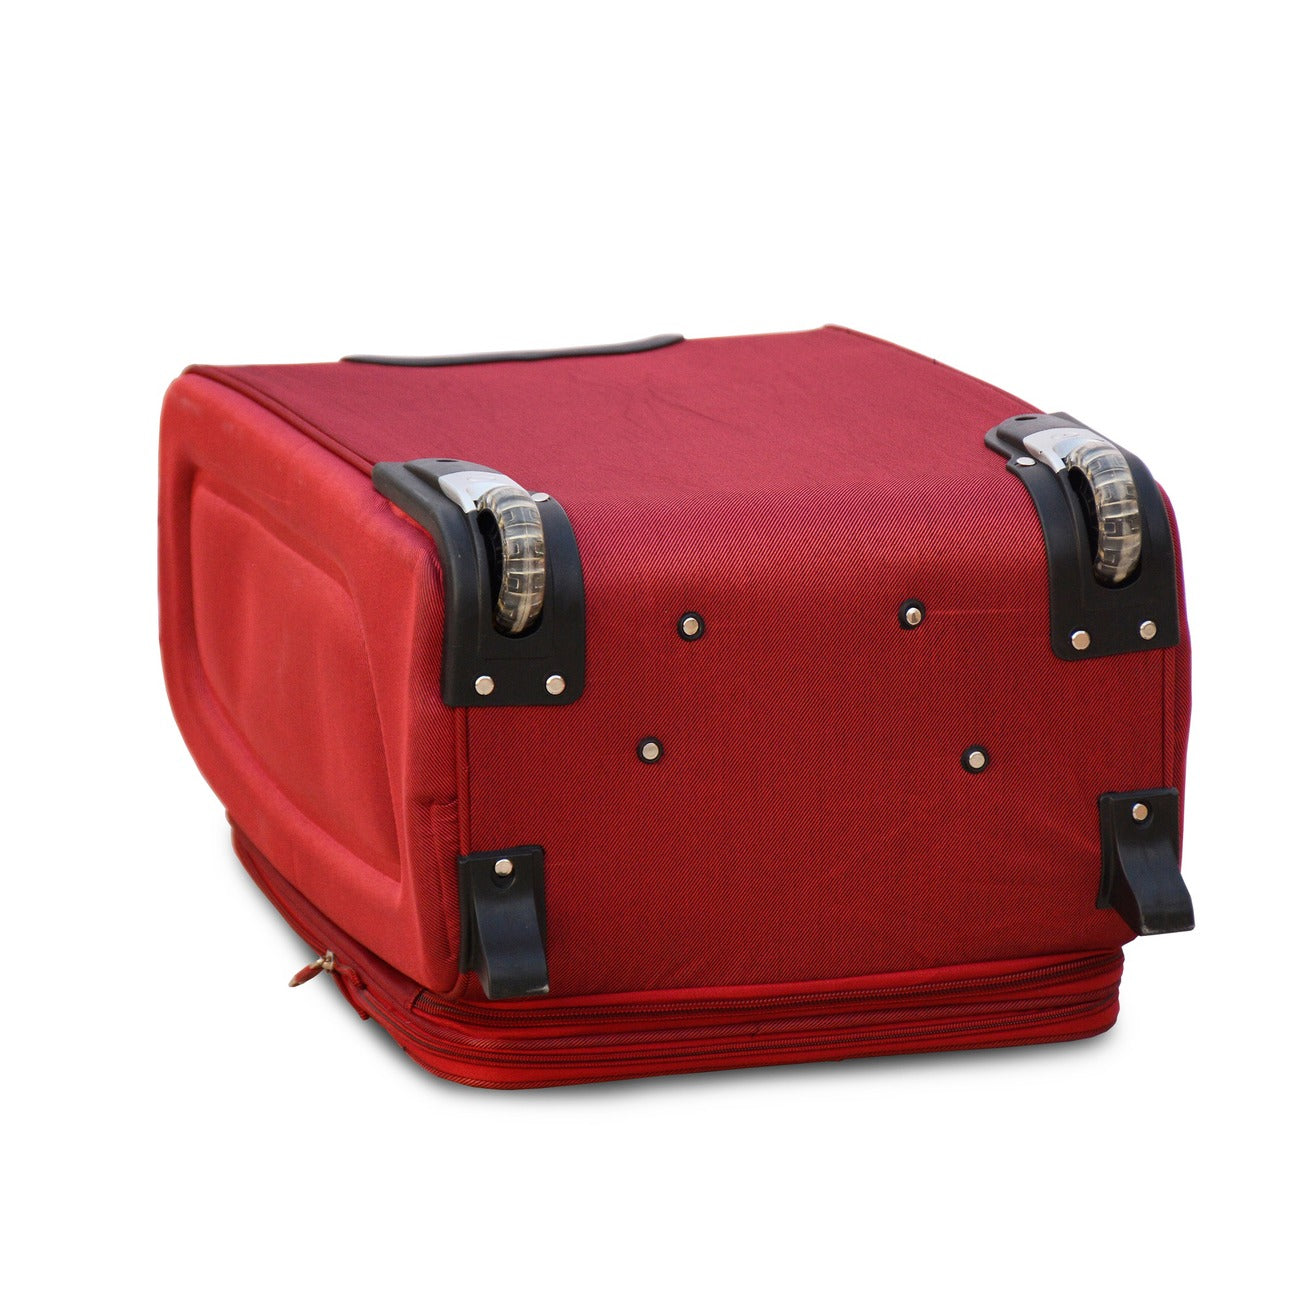 28" Red Colour SJ JIAN 2 Wheel Luggage Lightweight Soft Material Trolley Bag